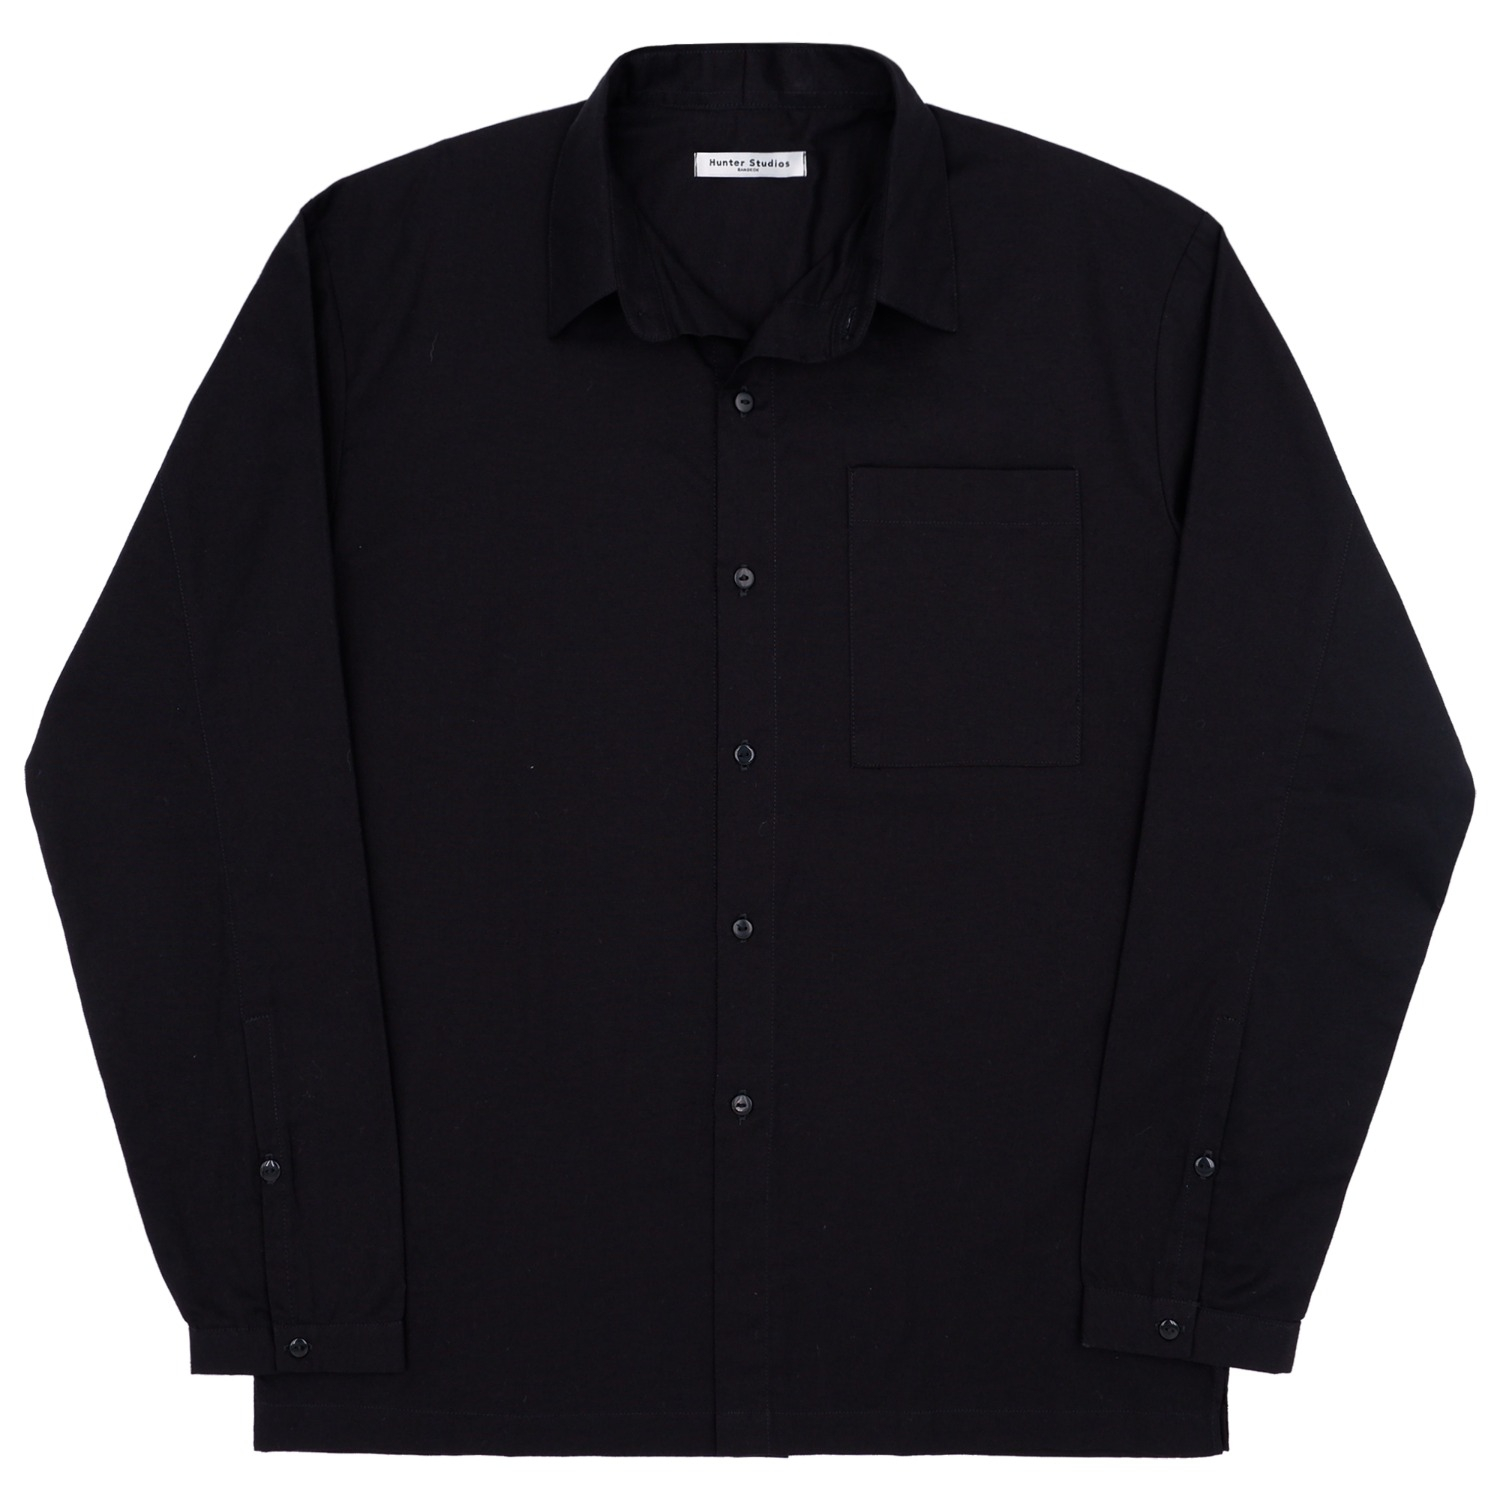 Fainly Long Shirt (Black)